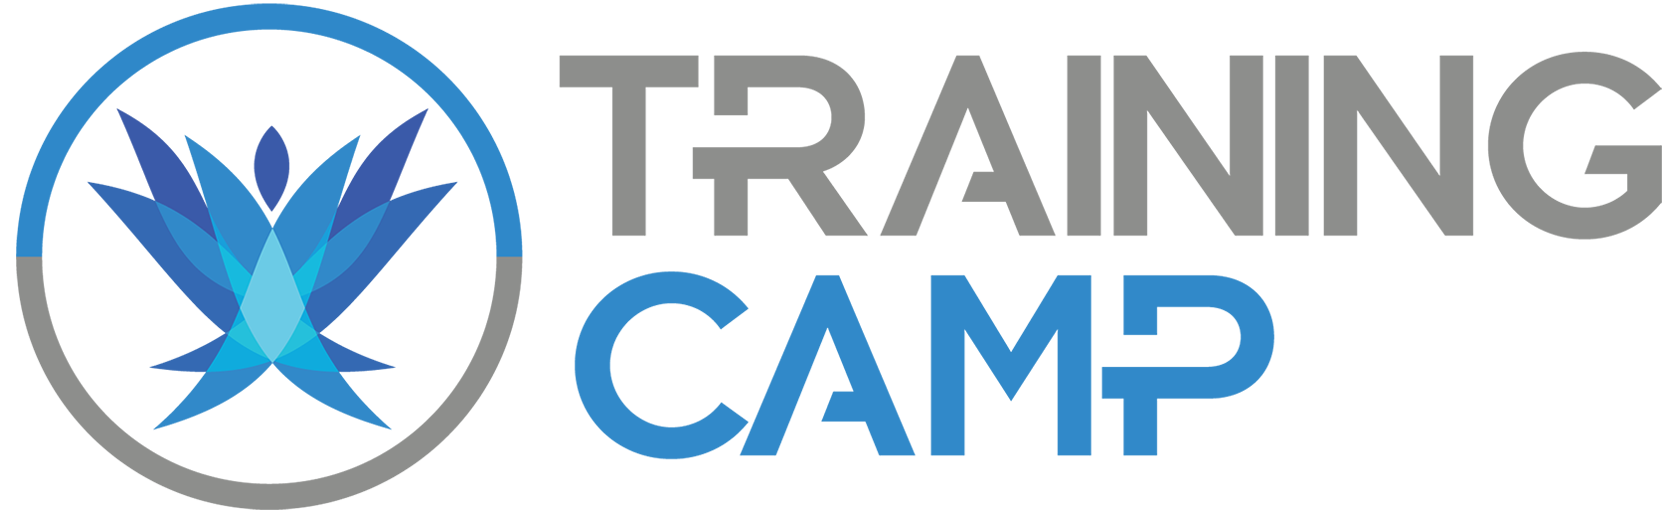 Training Camp Logo